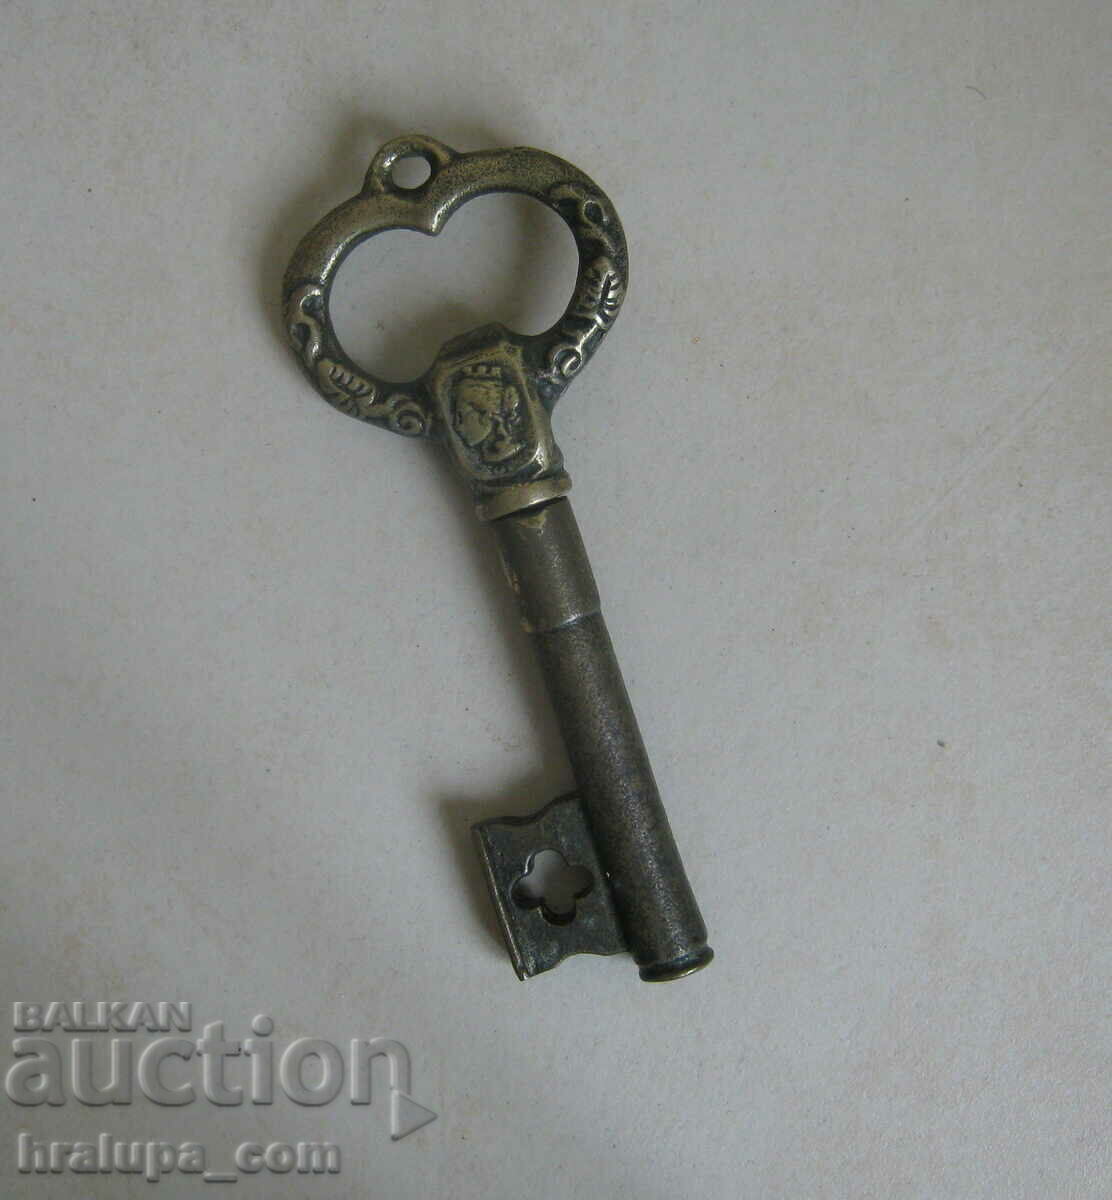 Old key corkscrew opener